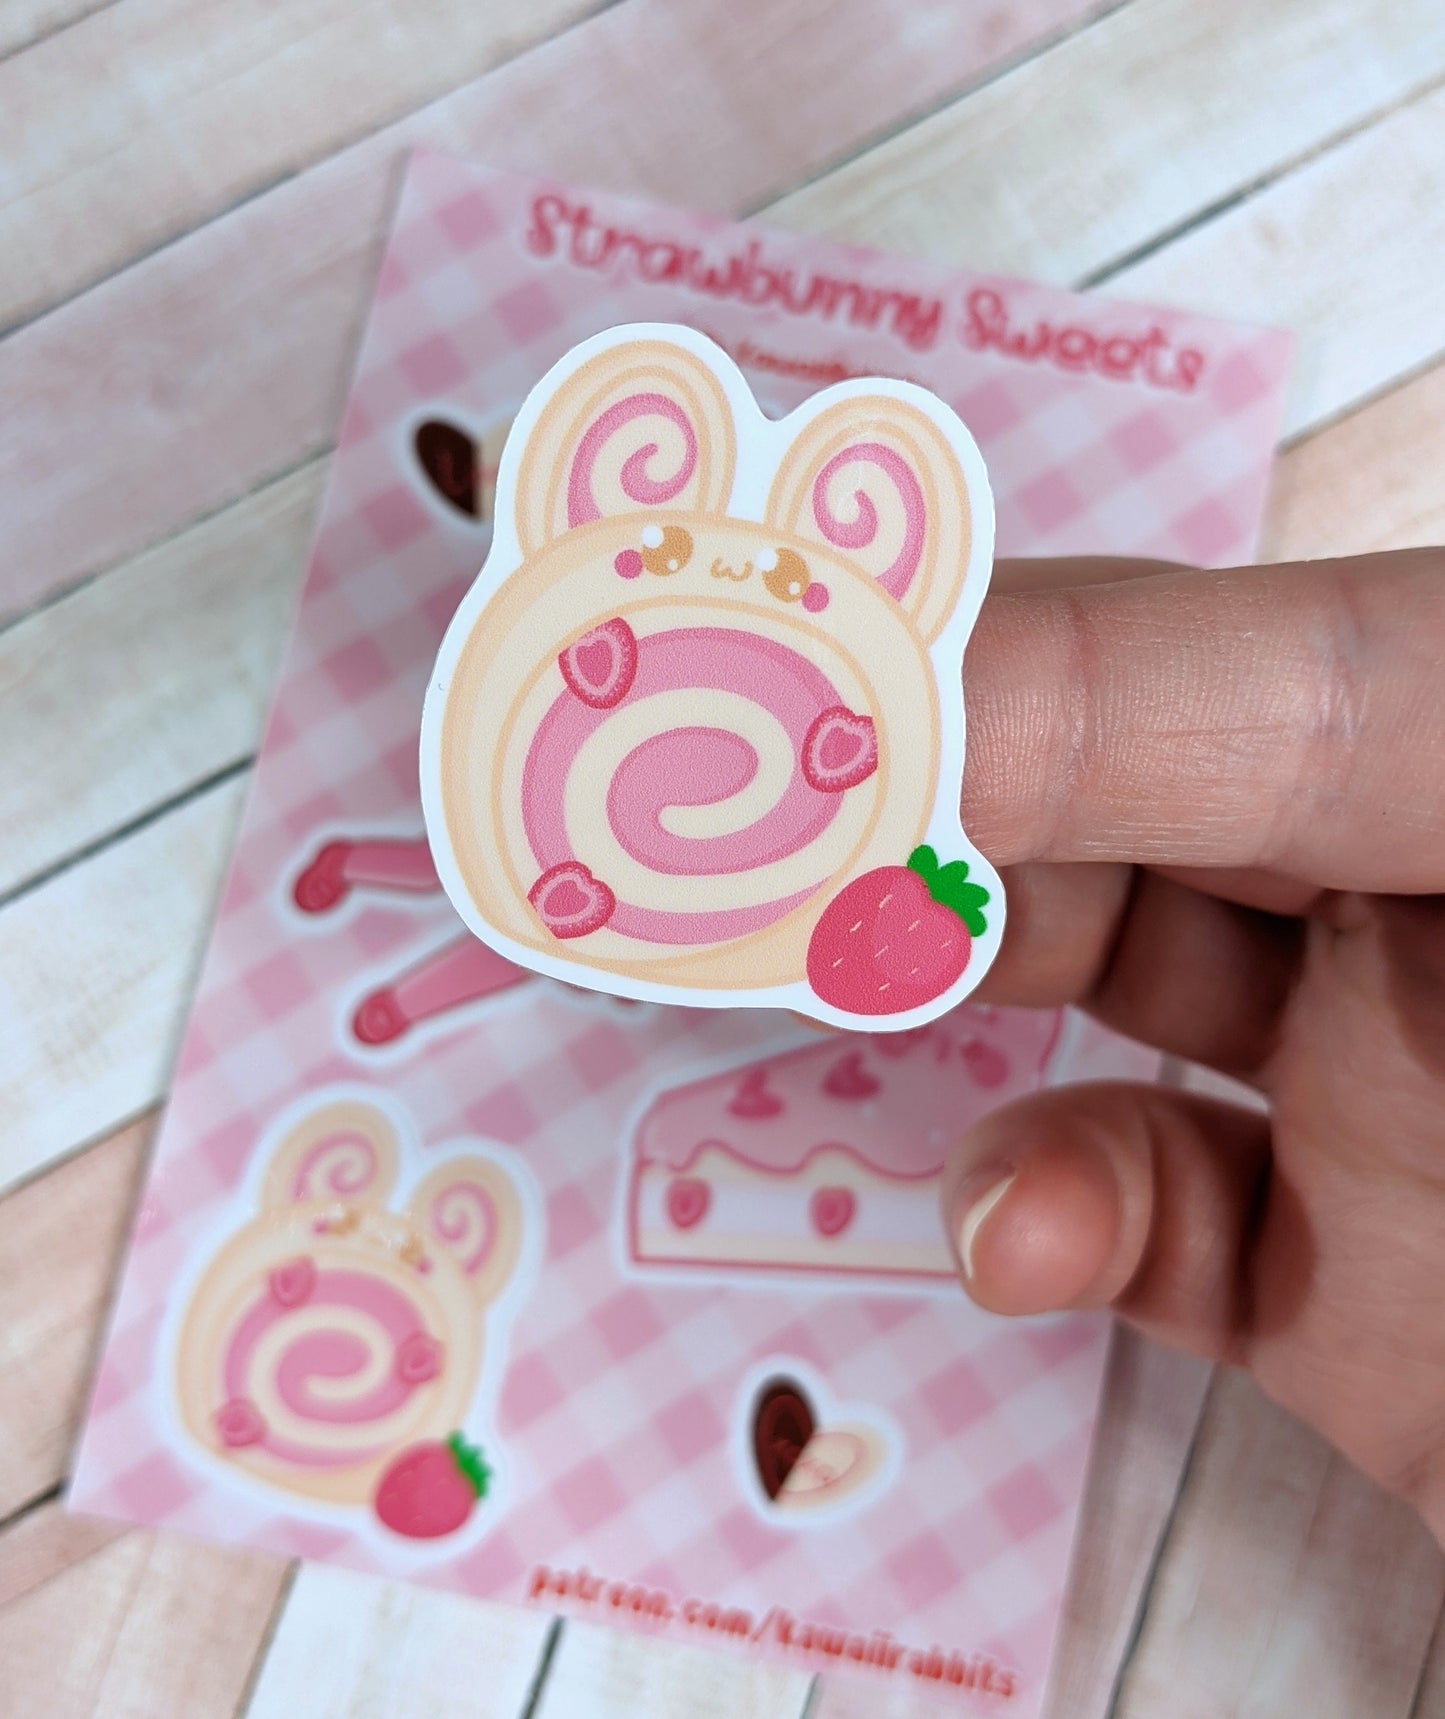 Strawbunny Sweets 4x6 Sticker Sheet